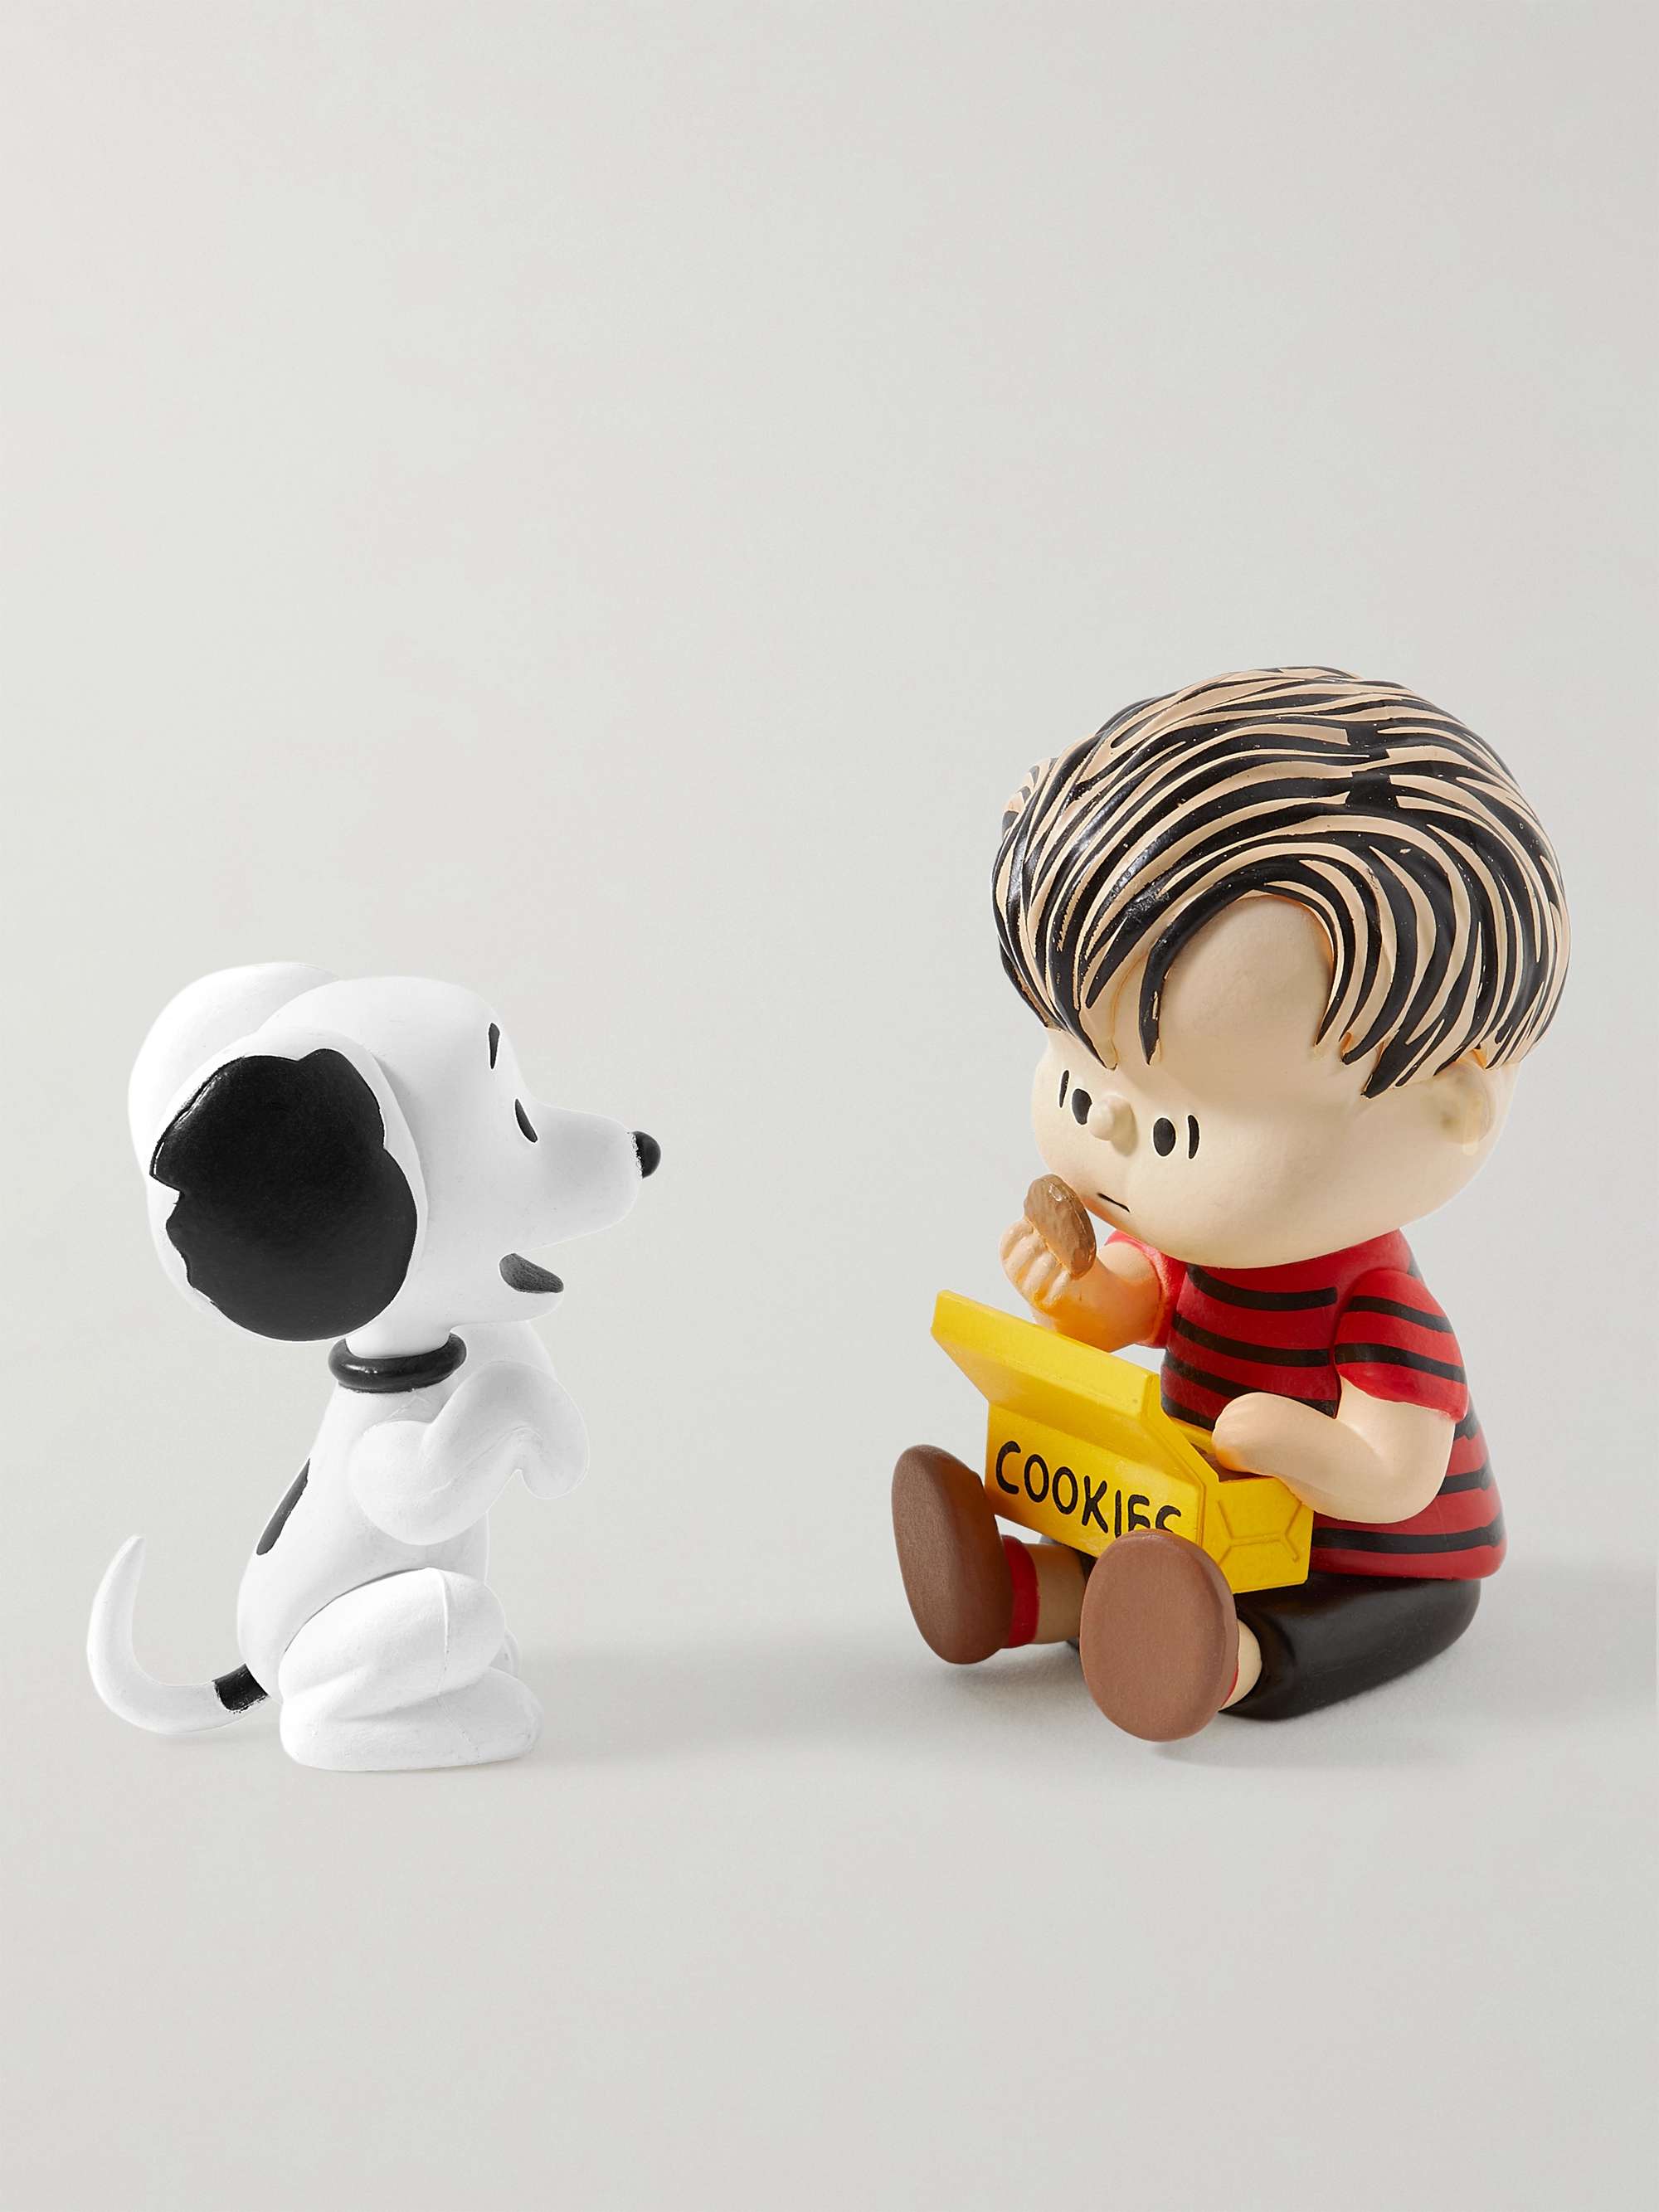 Snoopy with Linus Blanket Ultra Detail Figure by Medicom UDF Peanuts Series 12